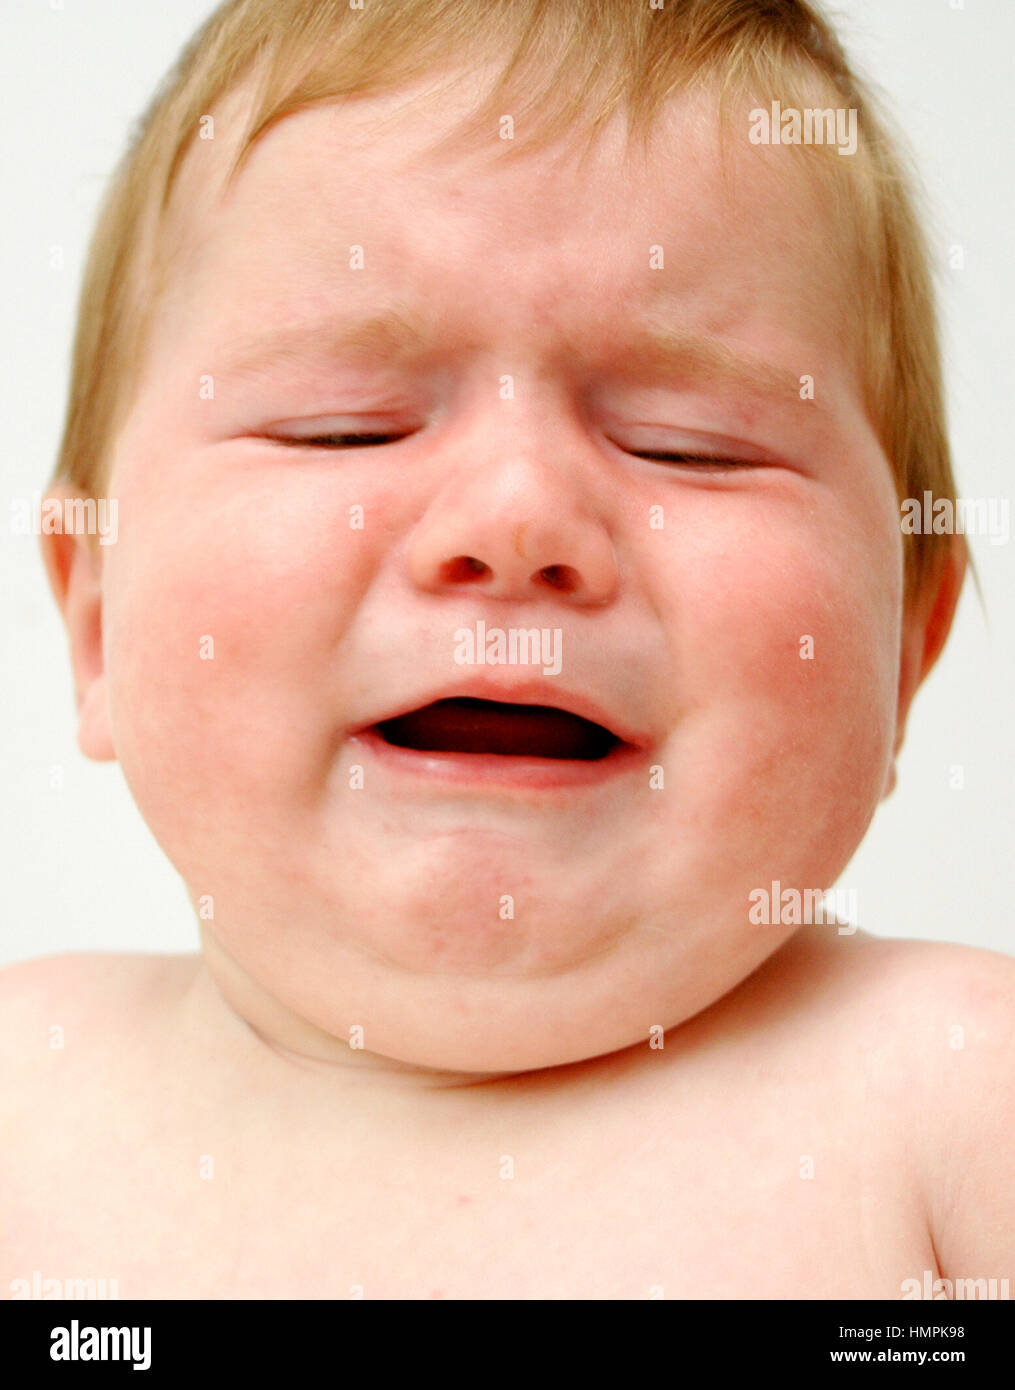 7 mes de edad bebé llorando Foto de stock